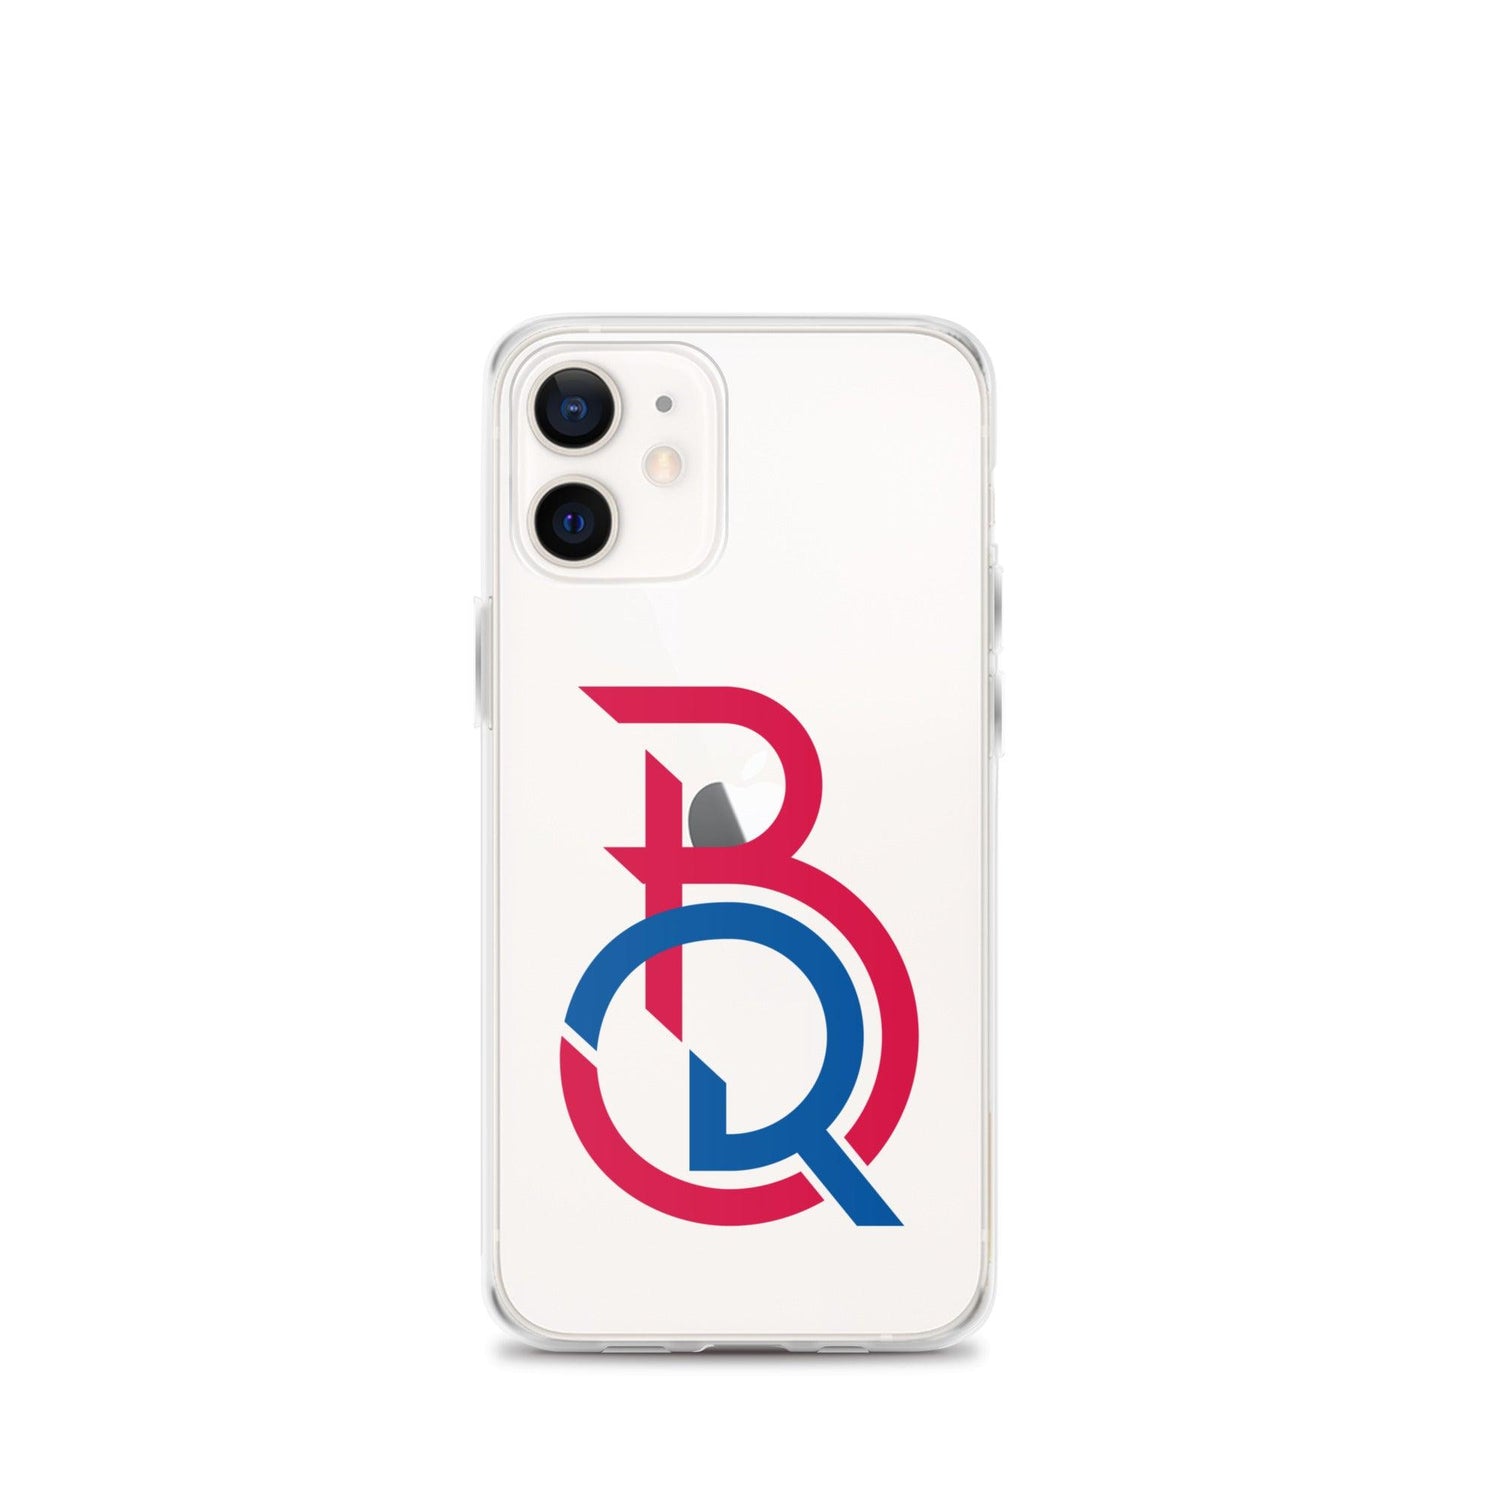 Baron Radcliff “Signature” iPhone Case - Fan Arch